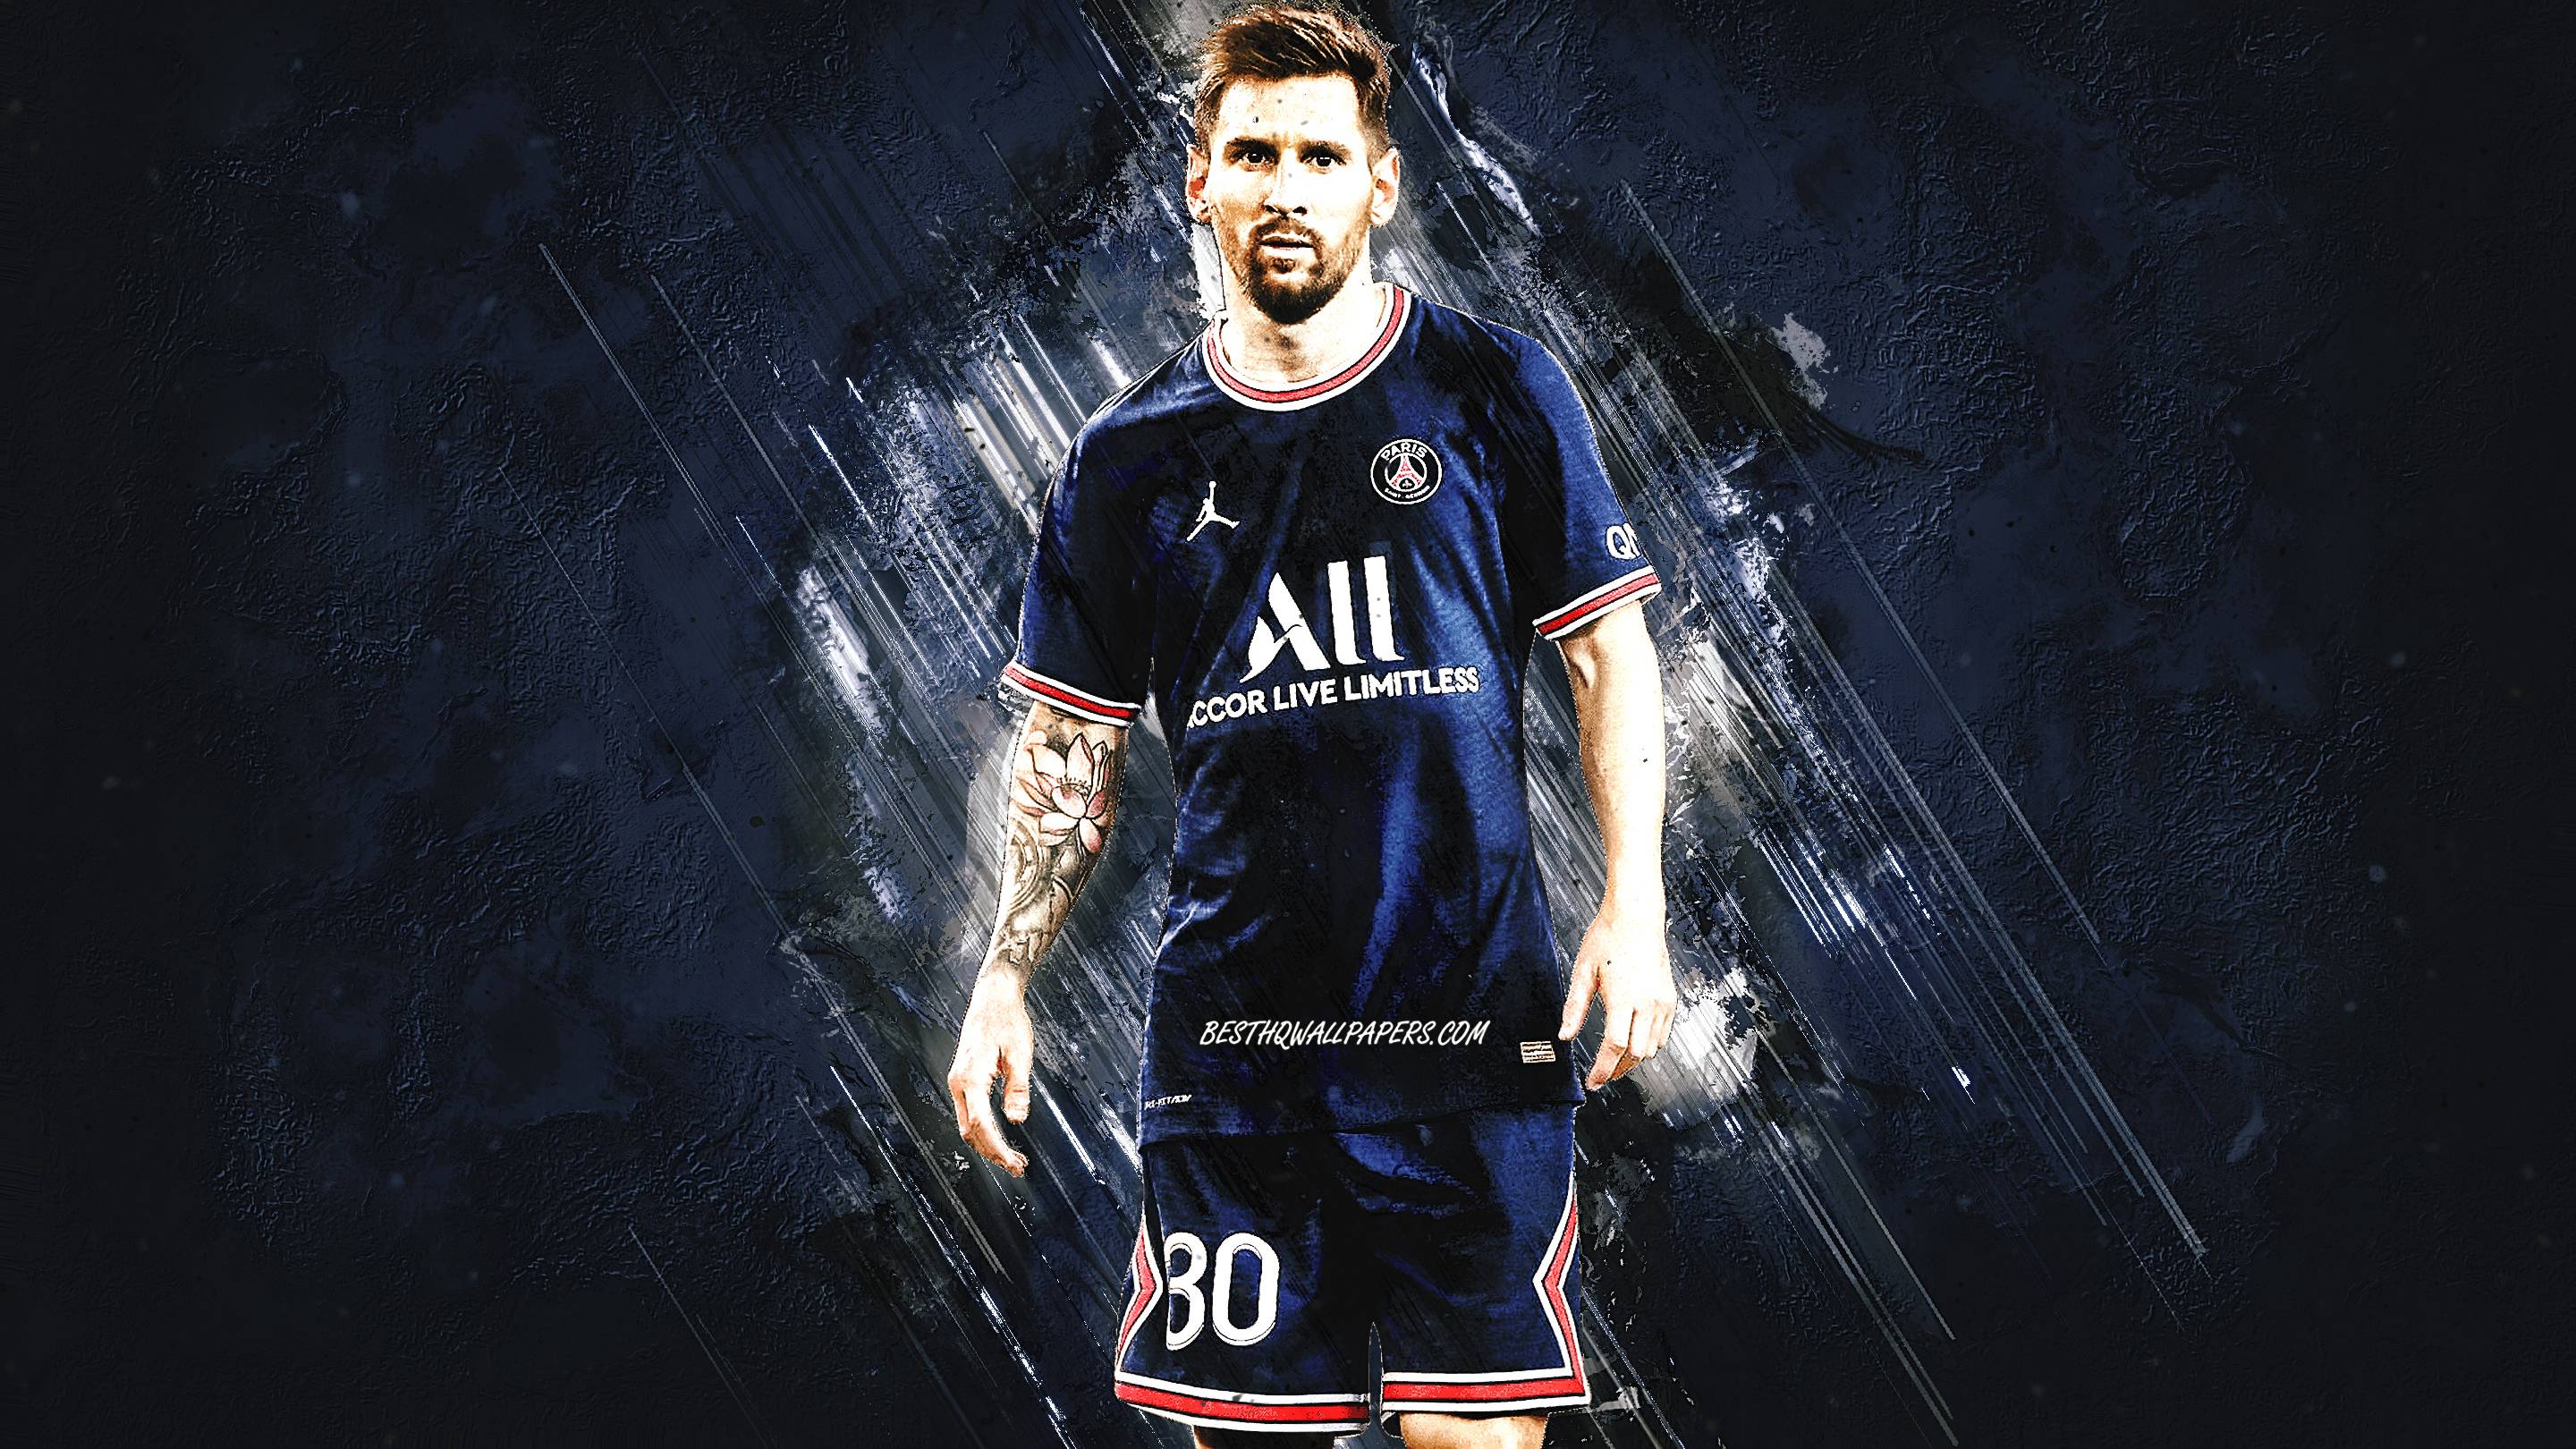 Messi Neymar Mbappe PSG Wallpaper Full HD Free Download